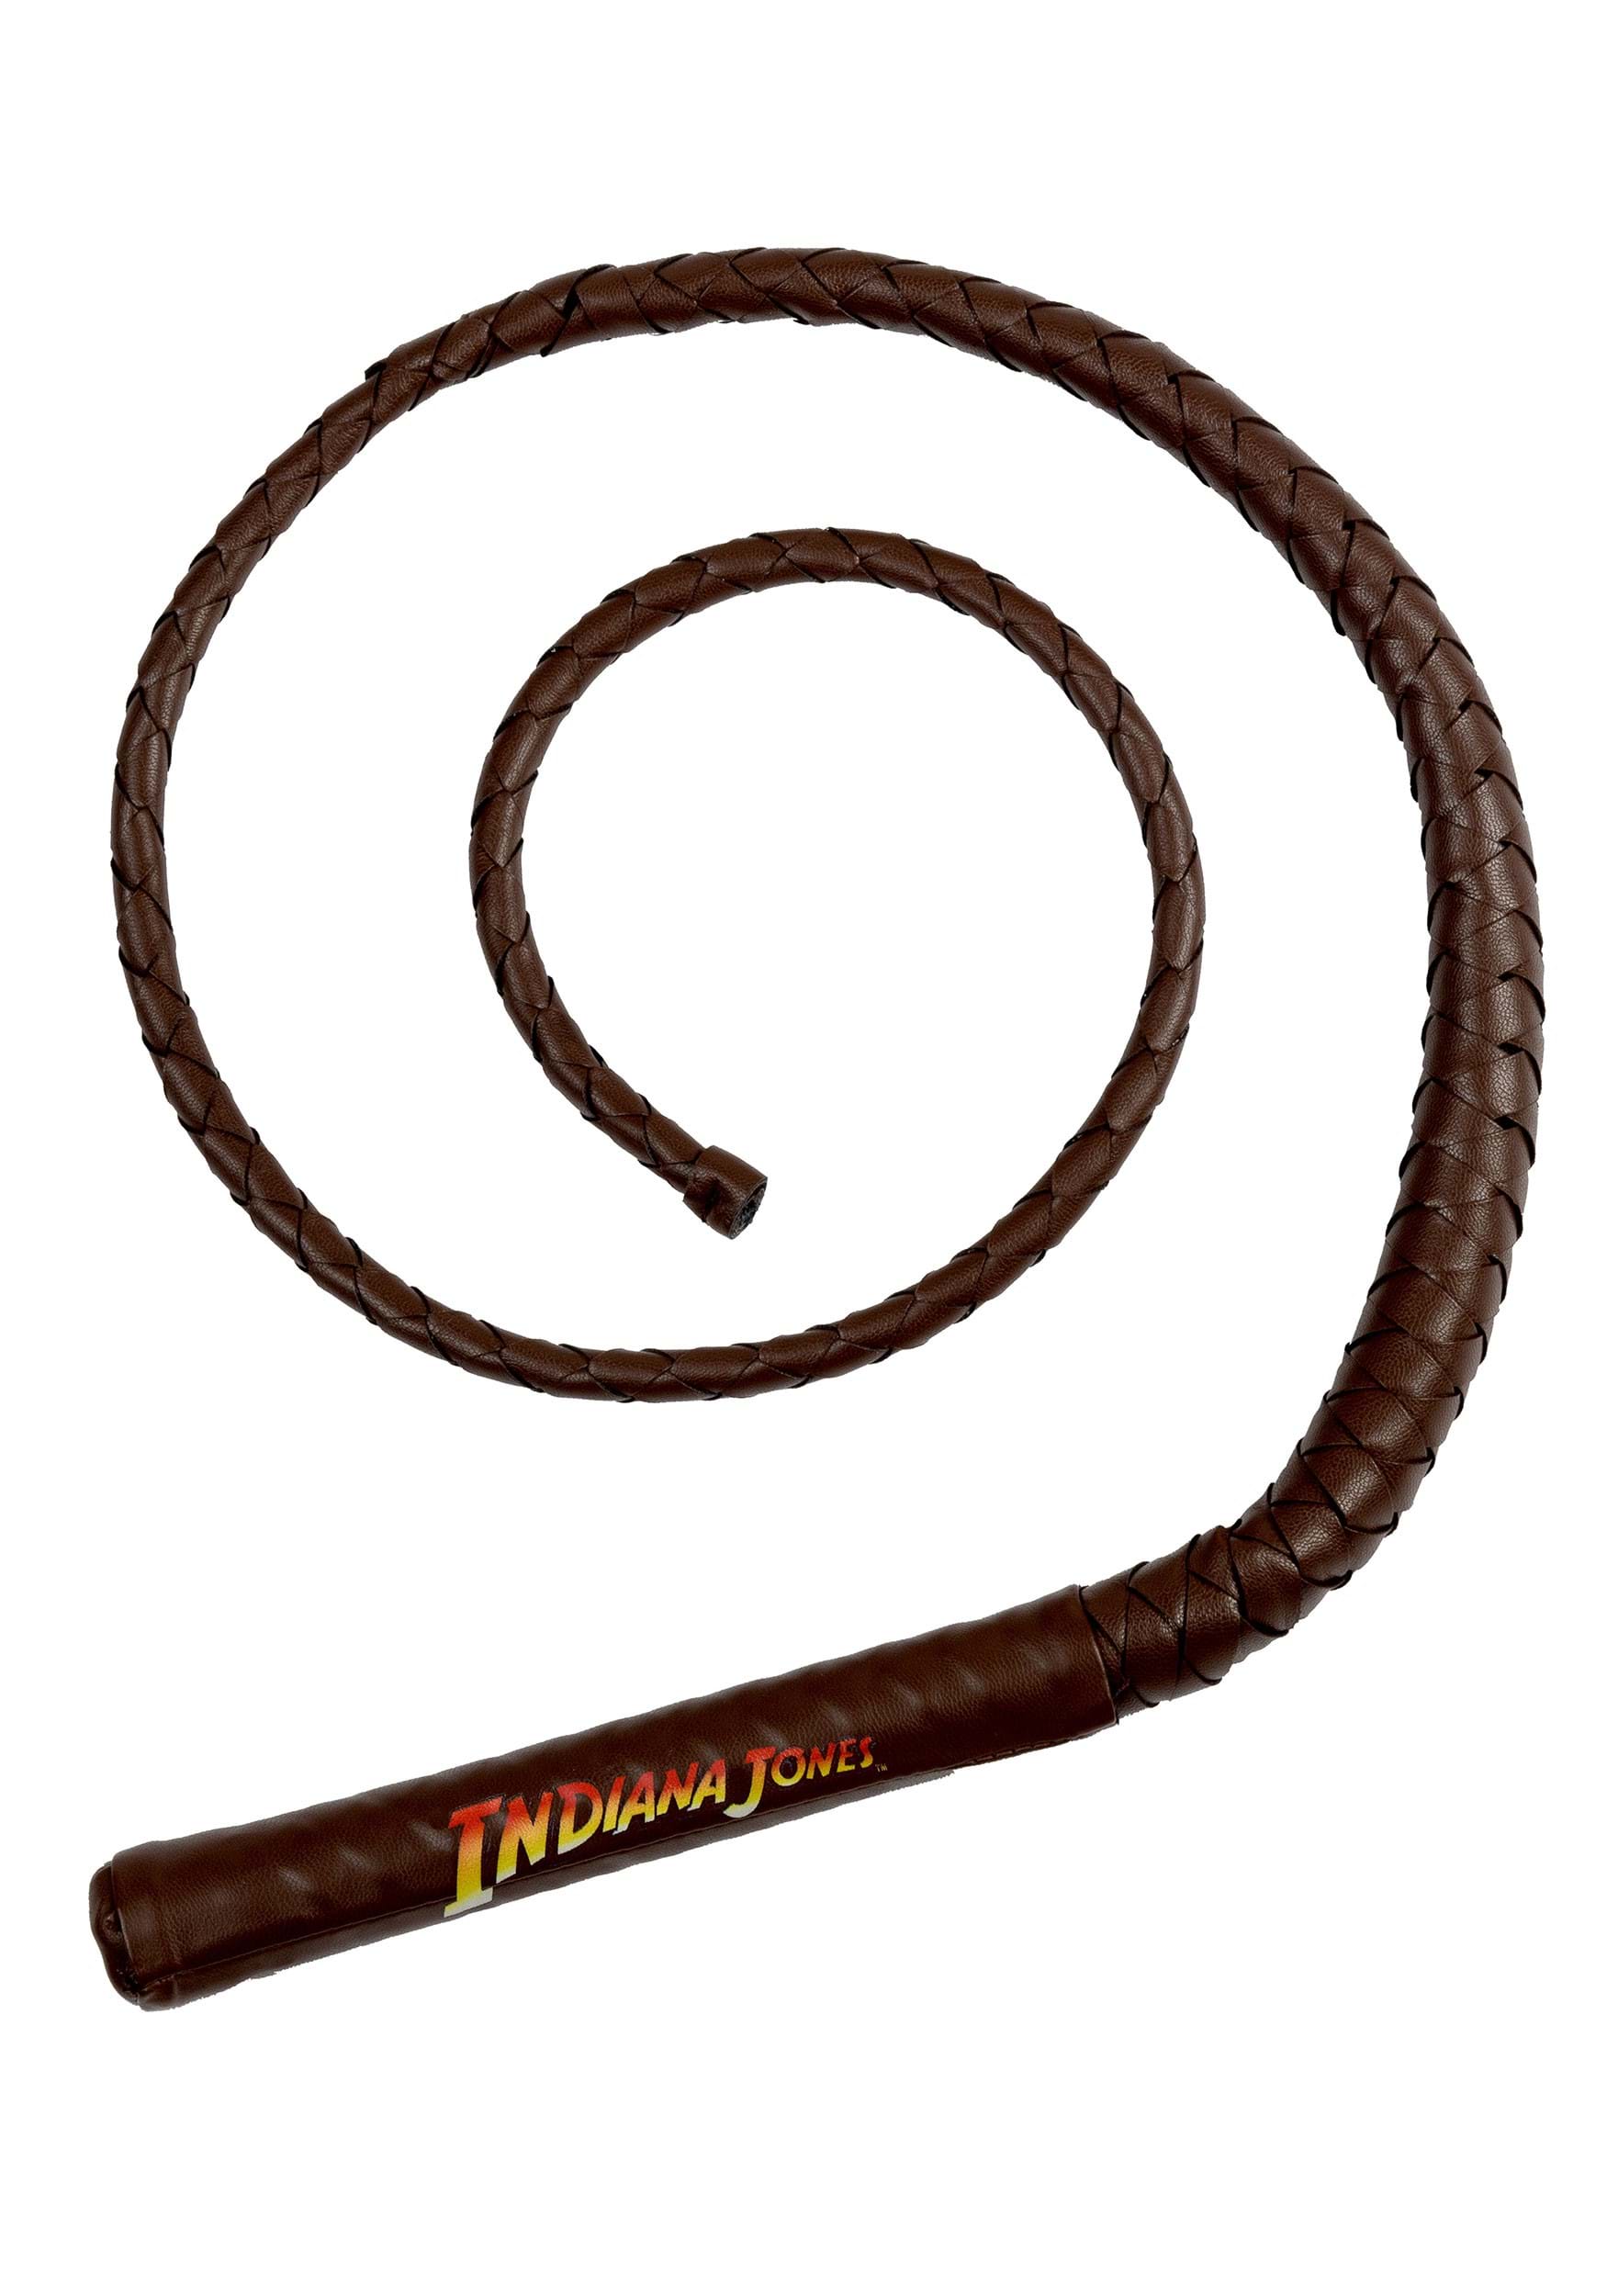 Indiana Jones Whip Accessory by Jazwares